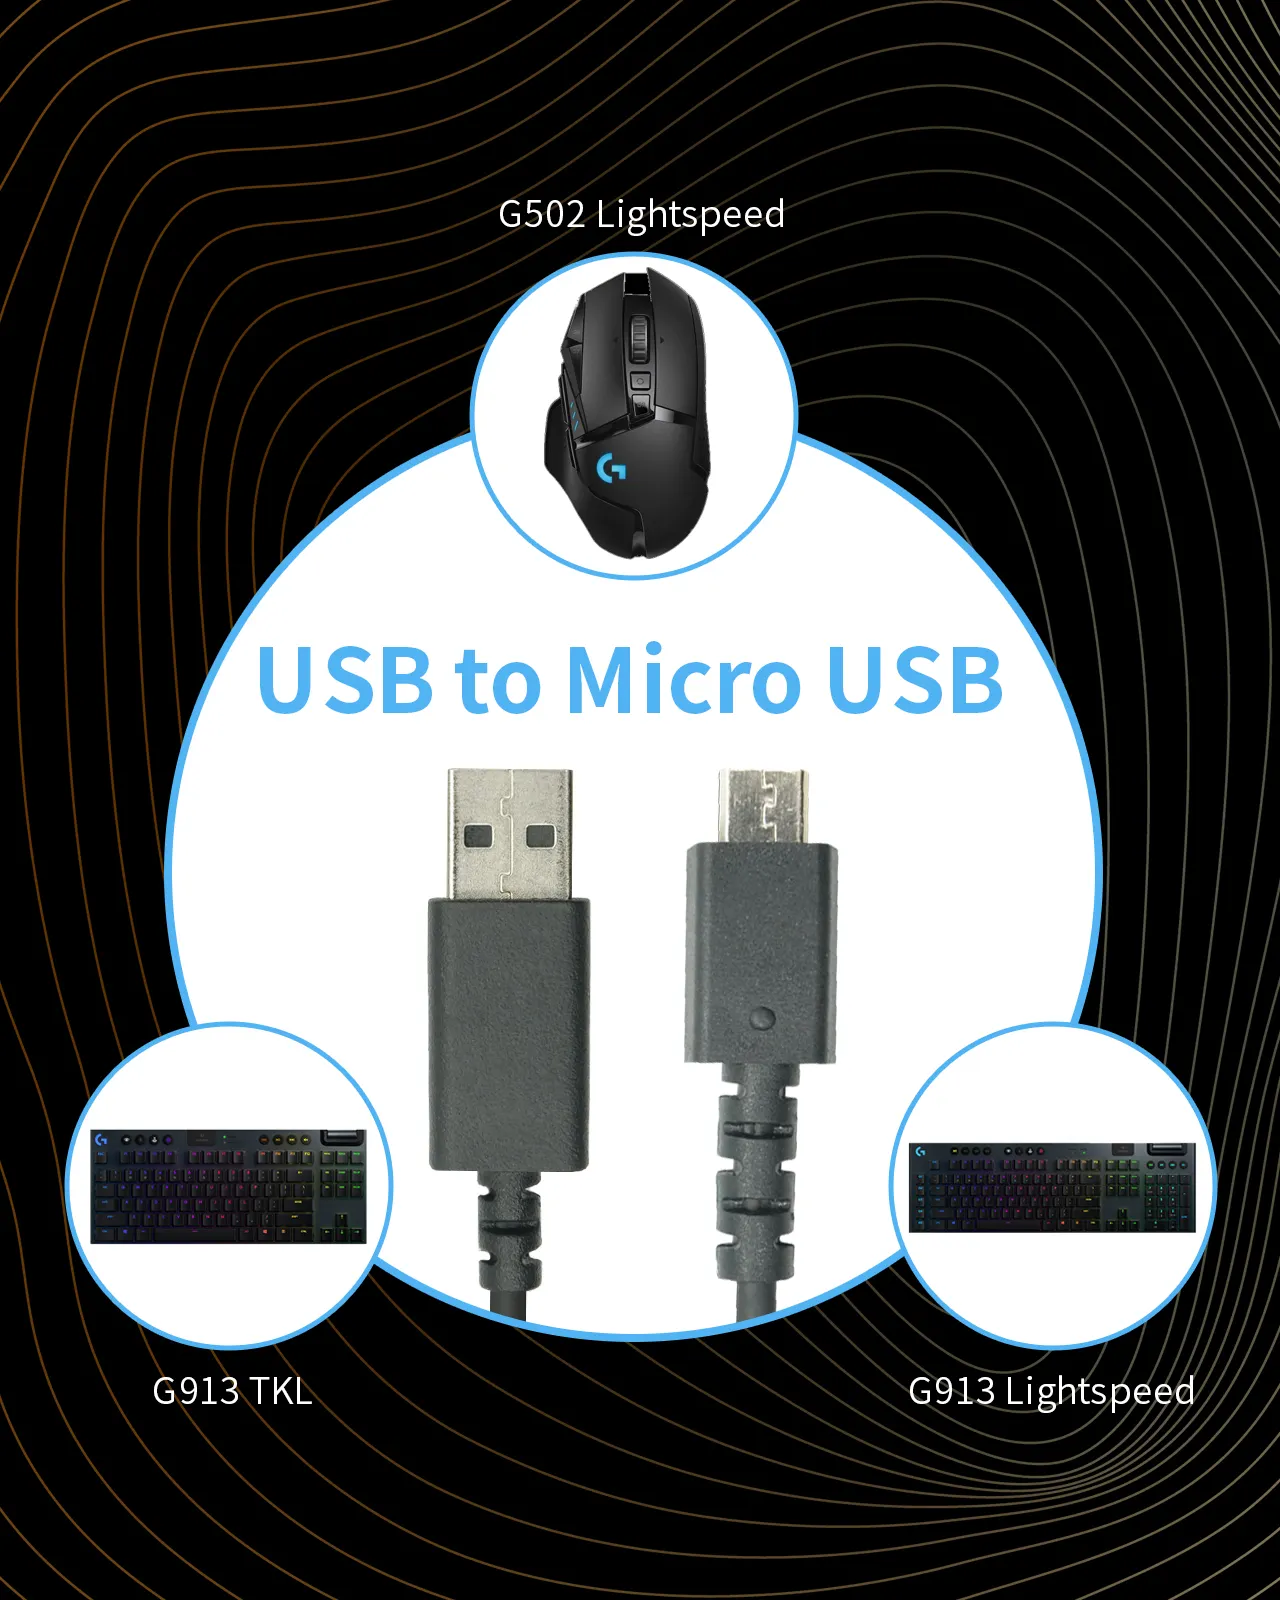 Logitech originale cavo di ricarica USB per G502 Lightspeed Wireless Gaming Mouse/G913 TKL tastiera USB a Micro USB (nero)